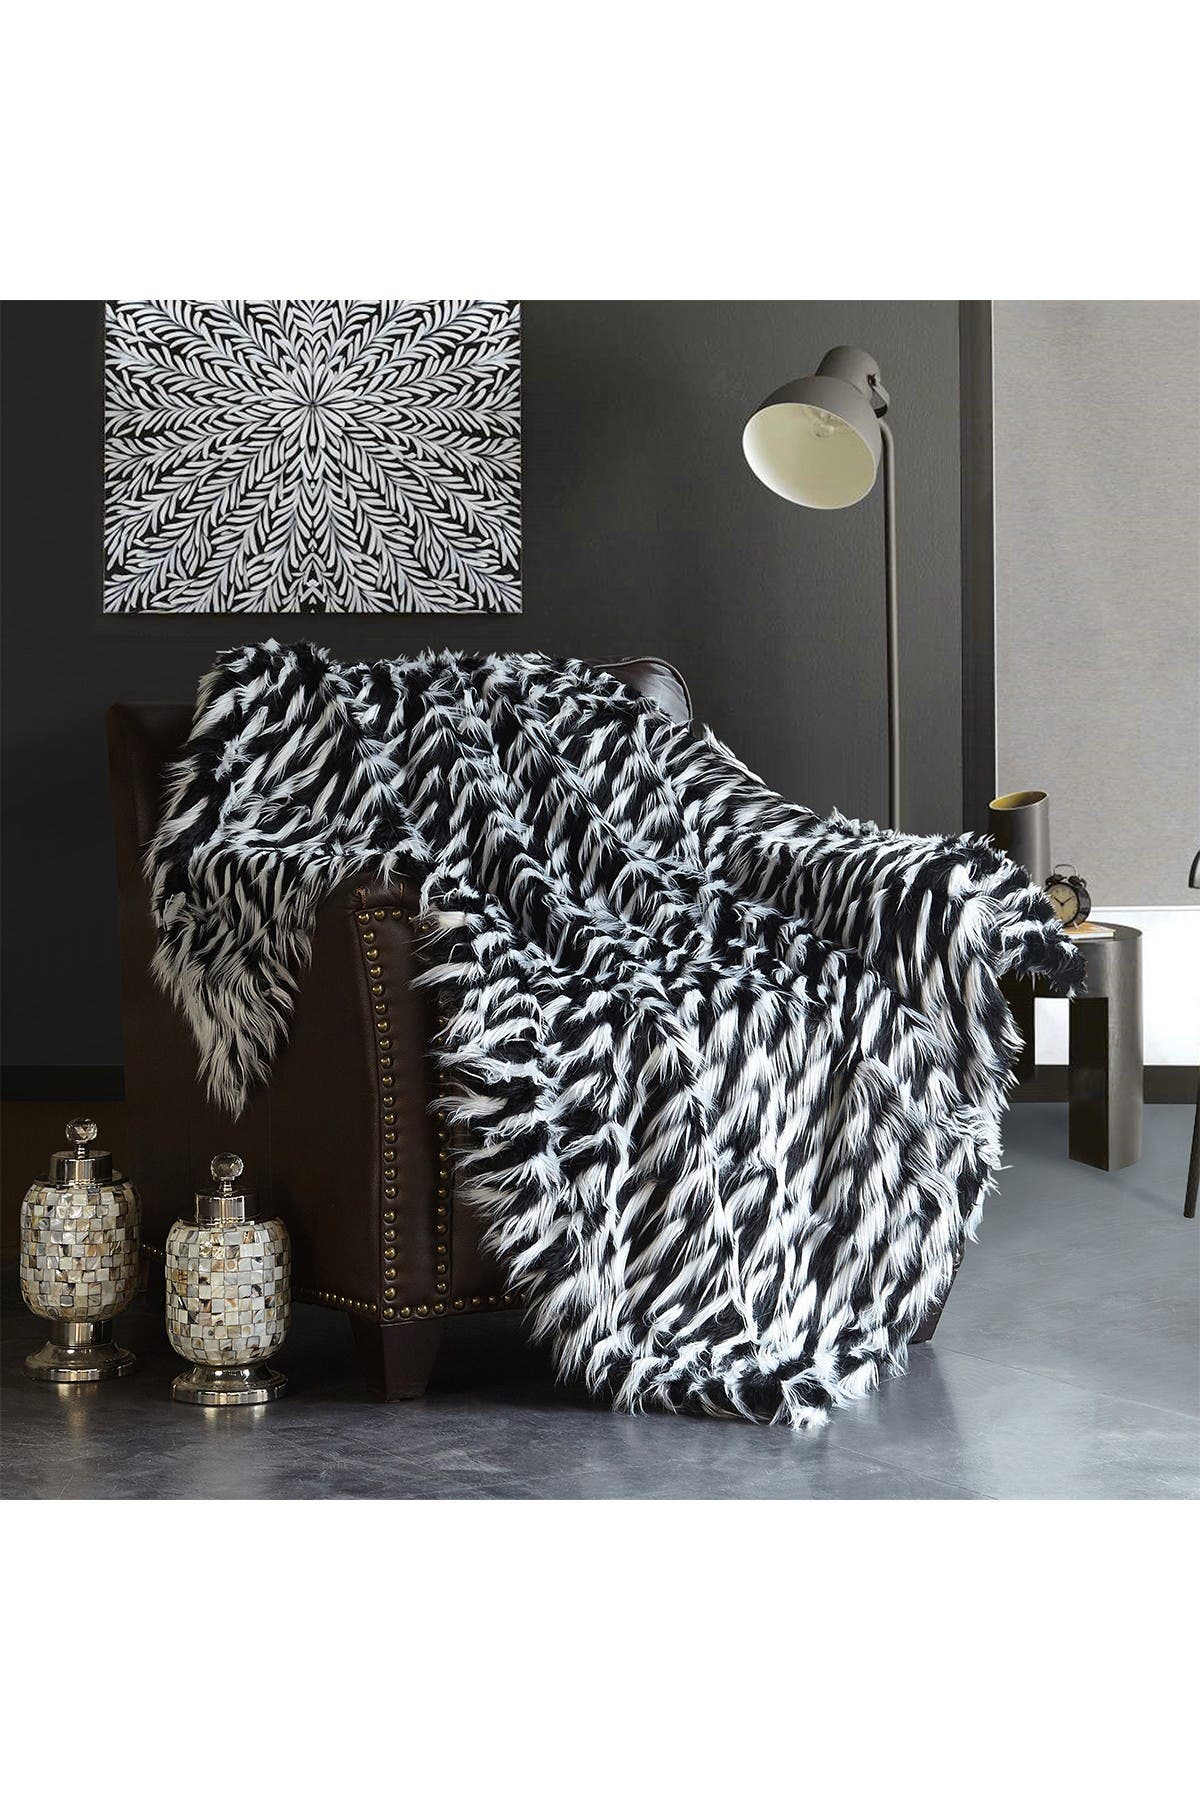 Nazaire Contemporary Faux Fur Decorative Throw Blanket 50 x 60 